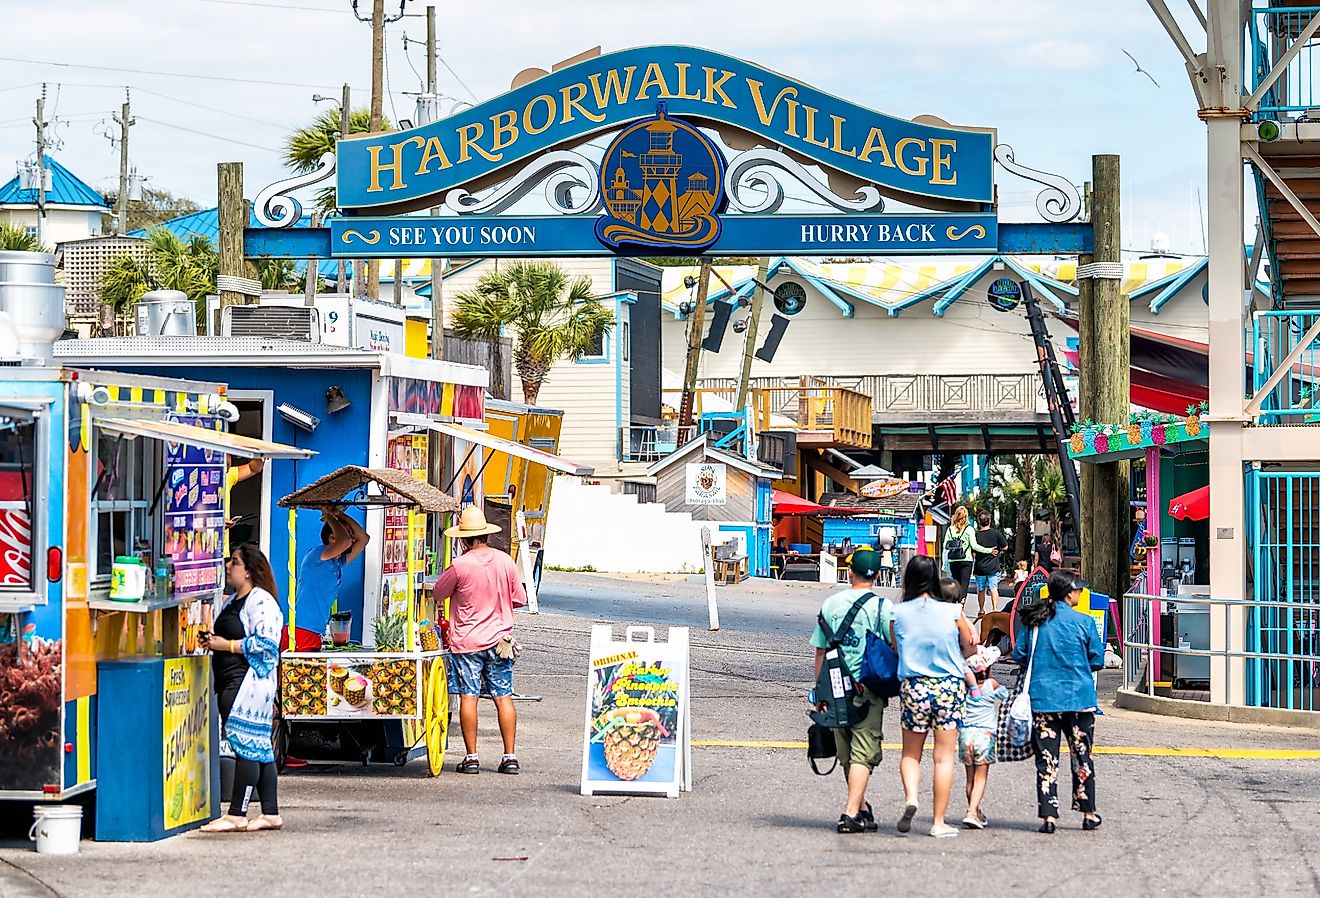 Harborwalk Village, Destin, Florida. Image credit Andriy Blokhin via Shutterstock.com